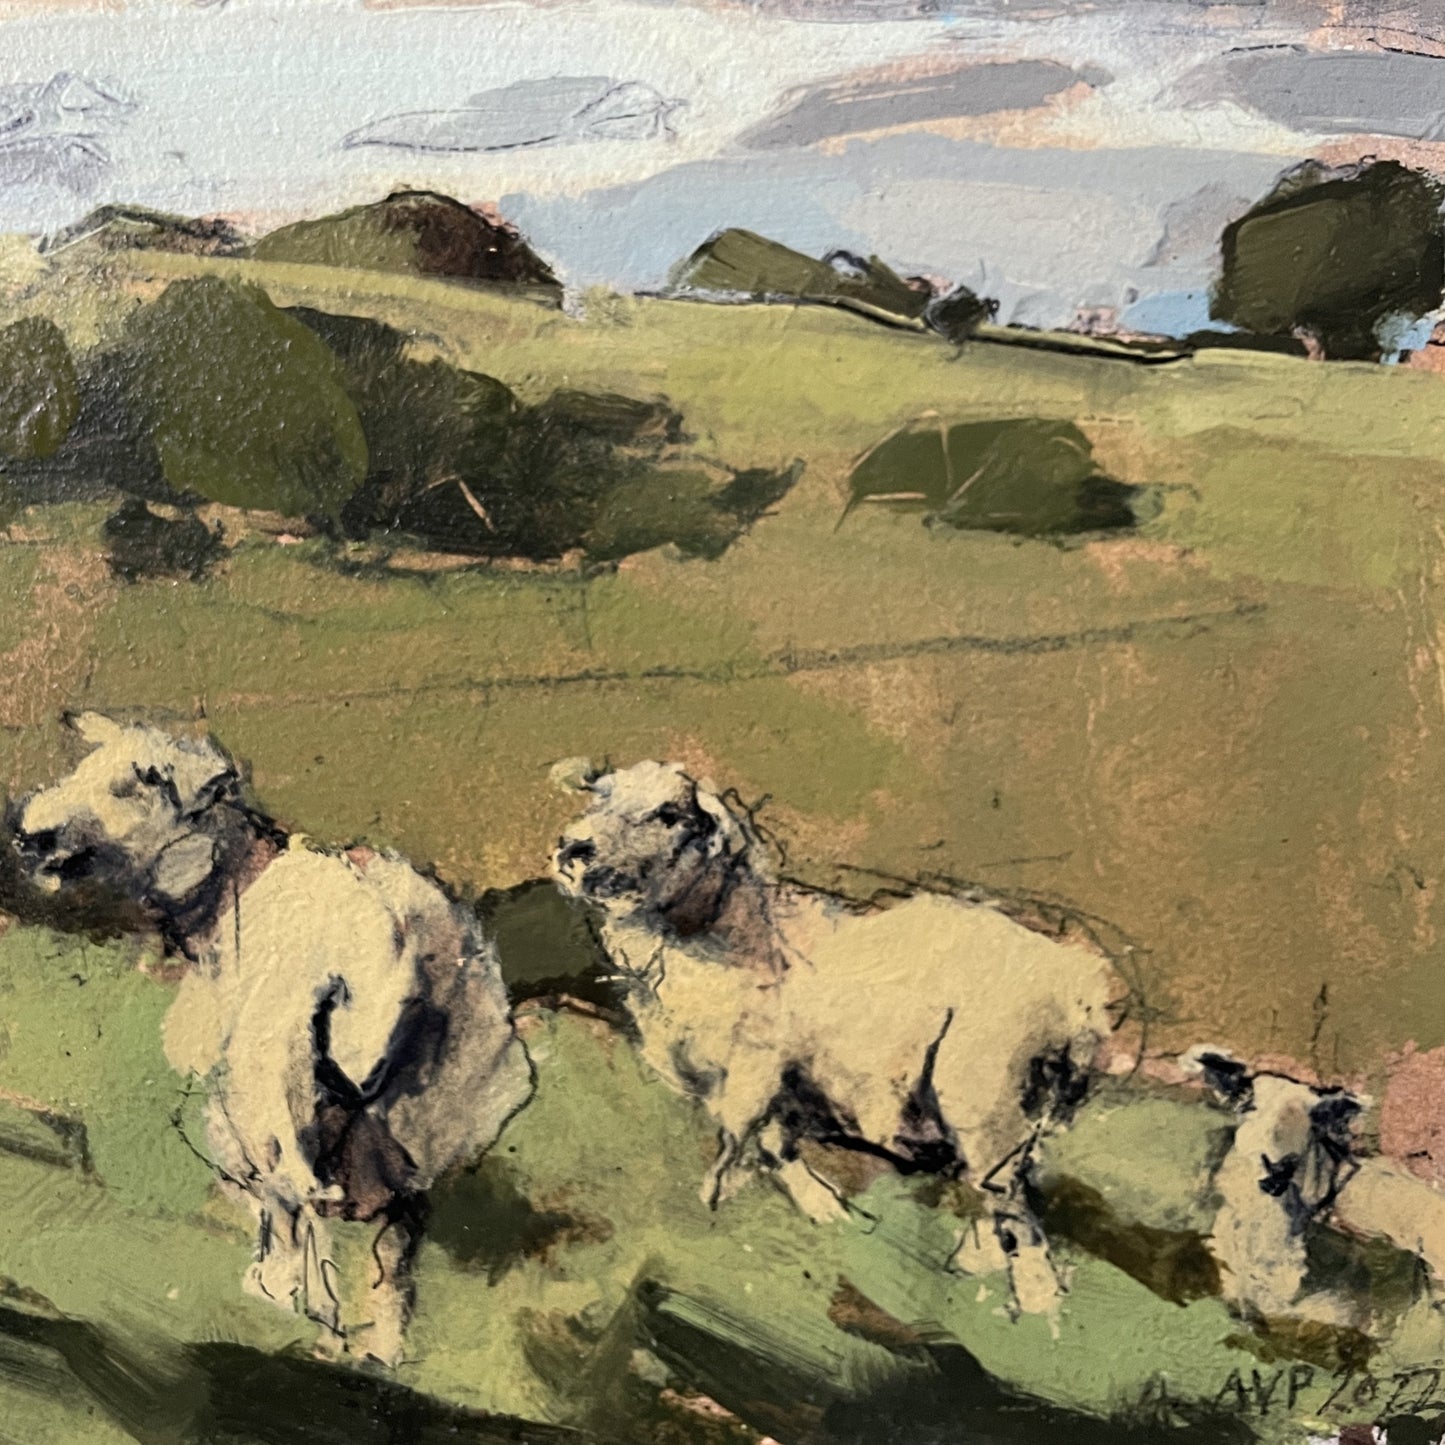 Sheep, South Downs, September II